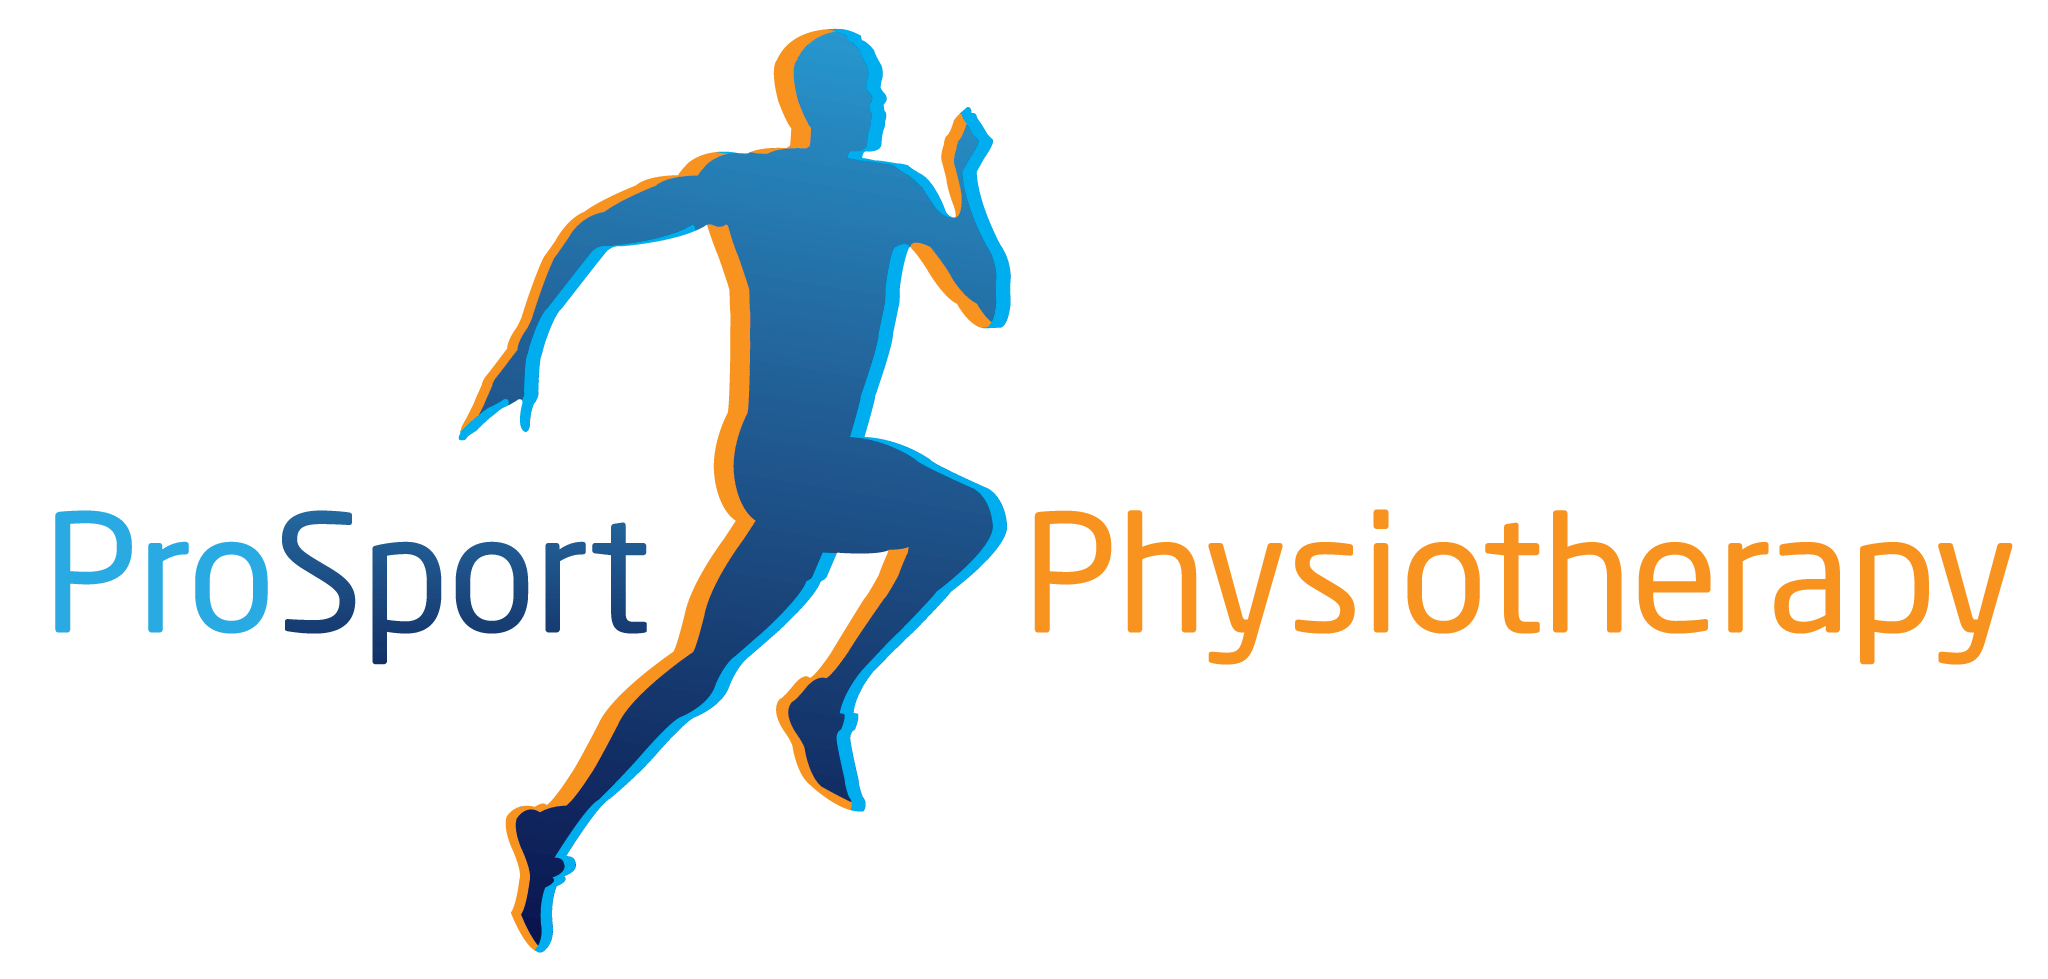 prosport-physiotherapy-logo